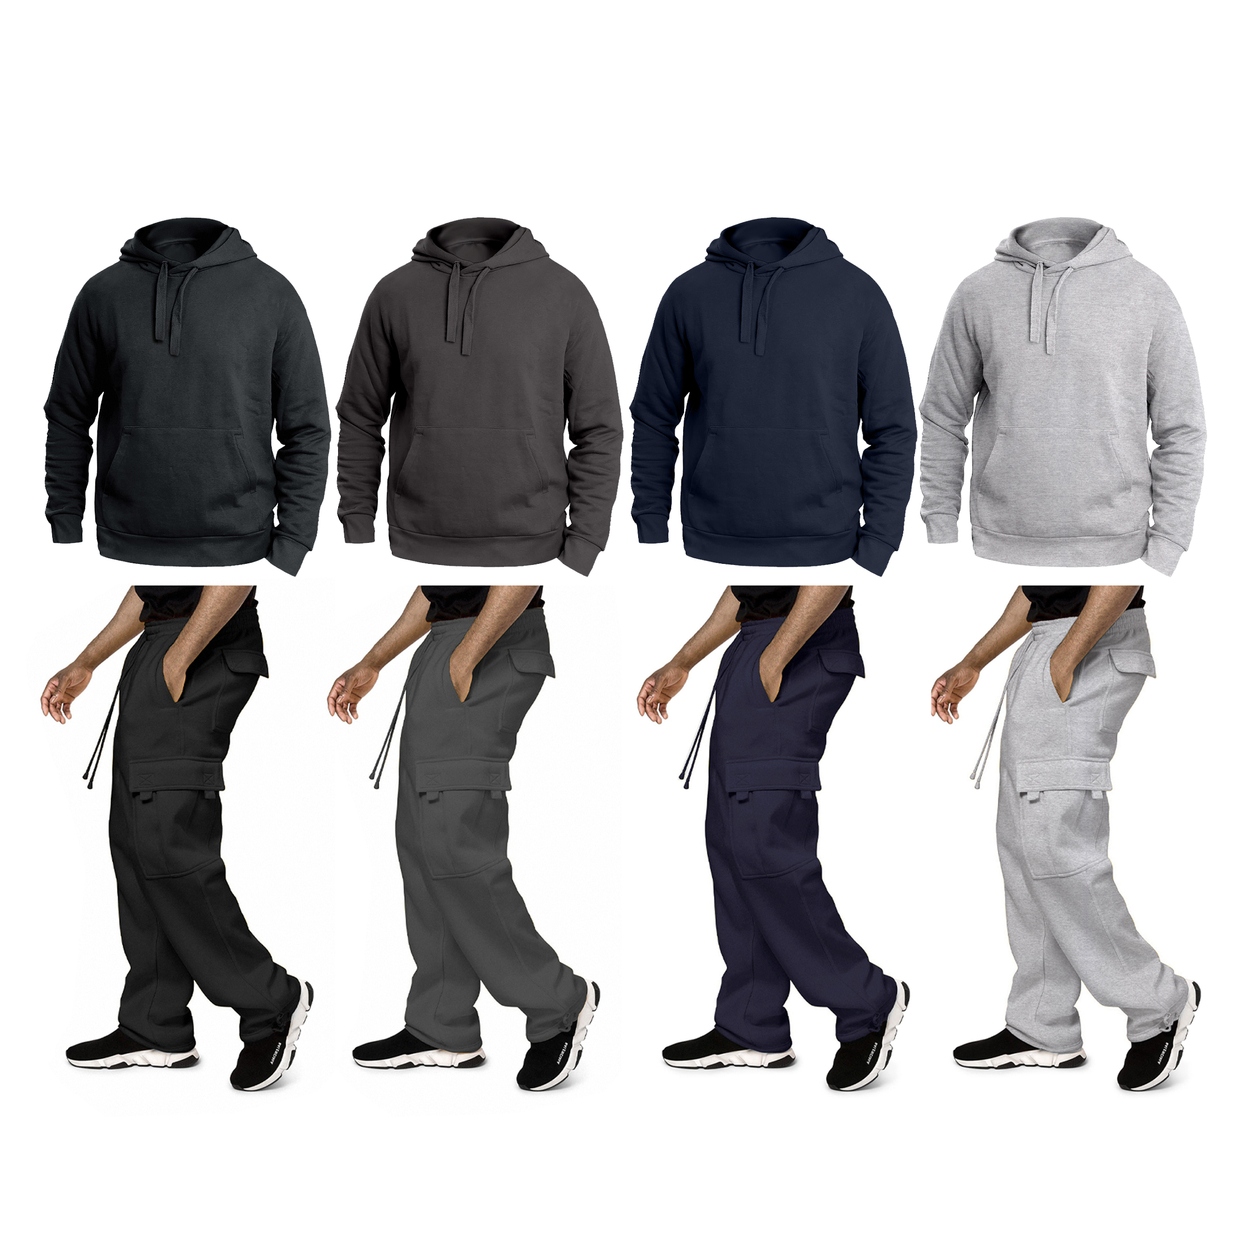 2-Pack: Men's Big & Tall Winter Warm Cozy Athletic Fleece Lined Multi-Pocket Cargo Sweatsuit - Grey, 3xl